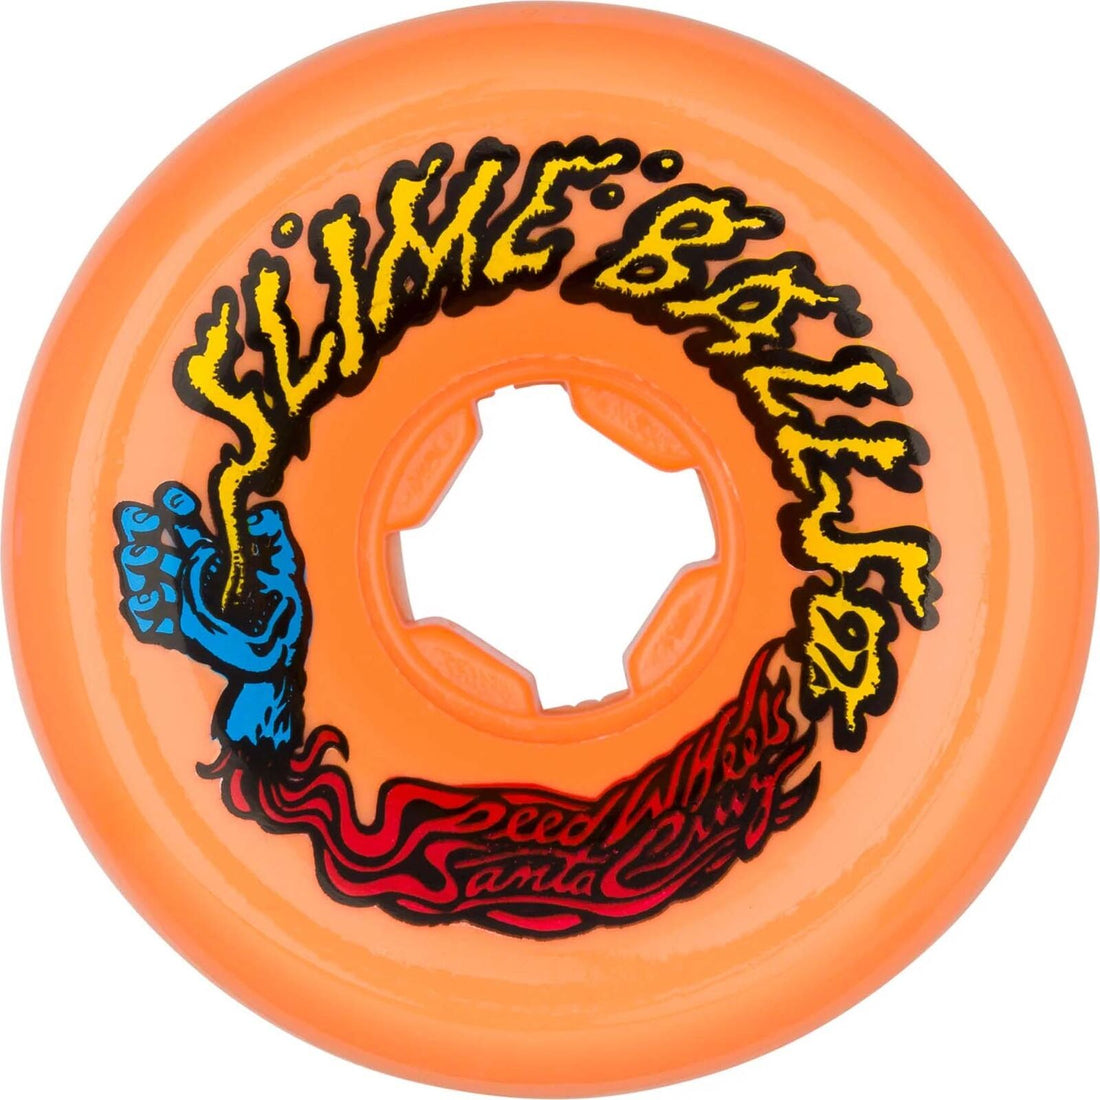 Santa Cruz Slime Balls Vomits Skateboard Wheel Orange 60mm